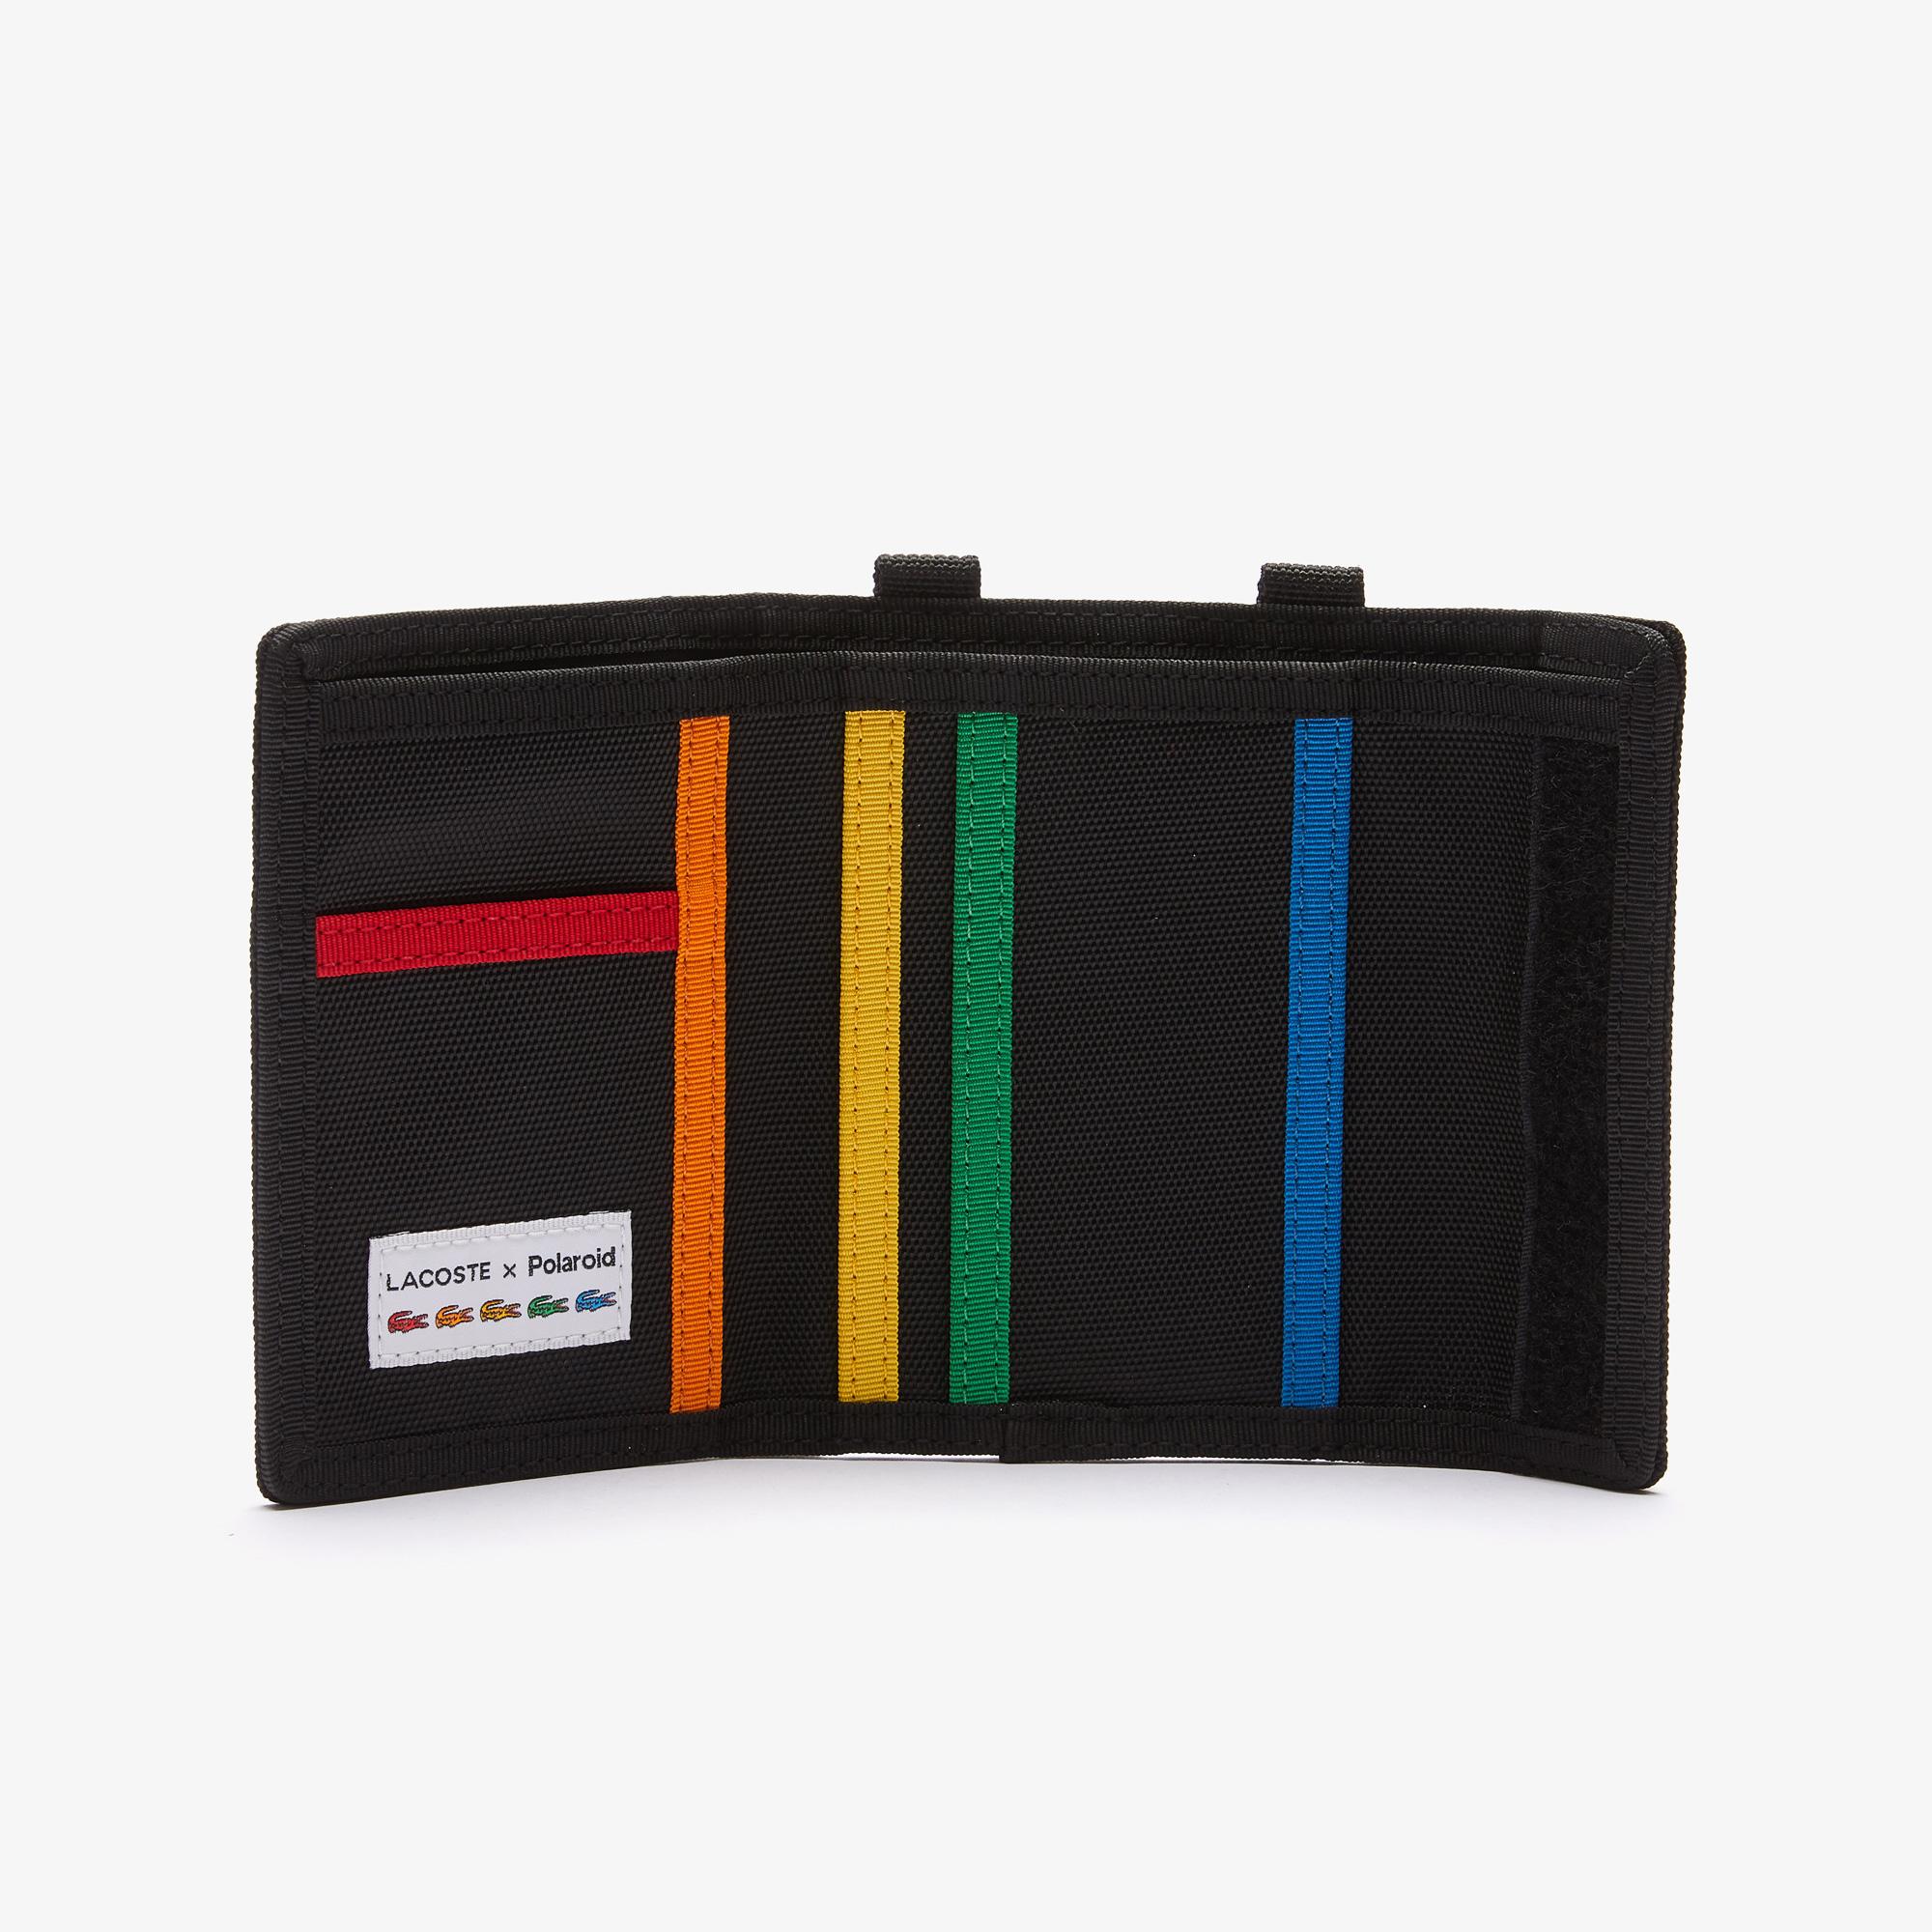 Lacoste x Polaroid Men’s Neck Strap Mini Wallet Bag